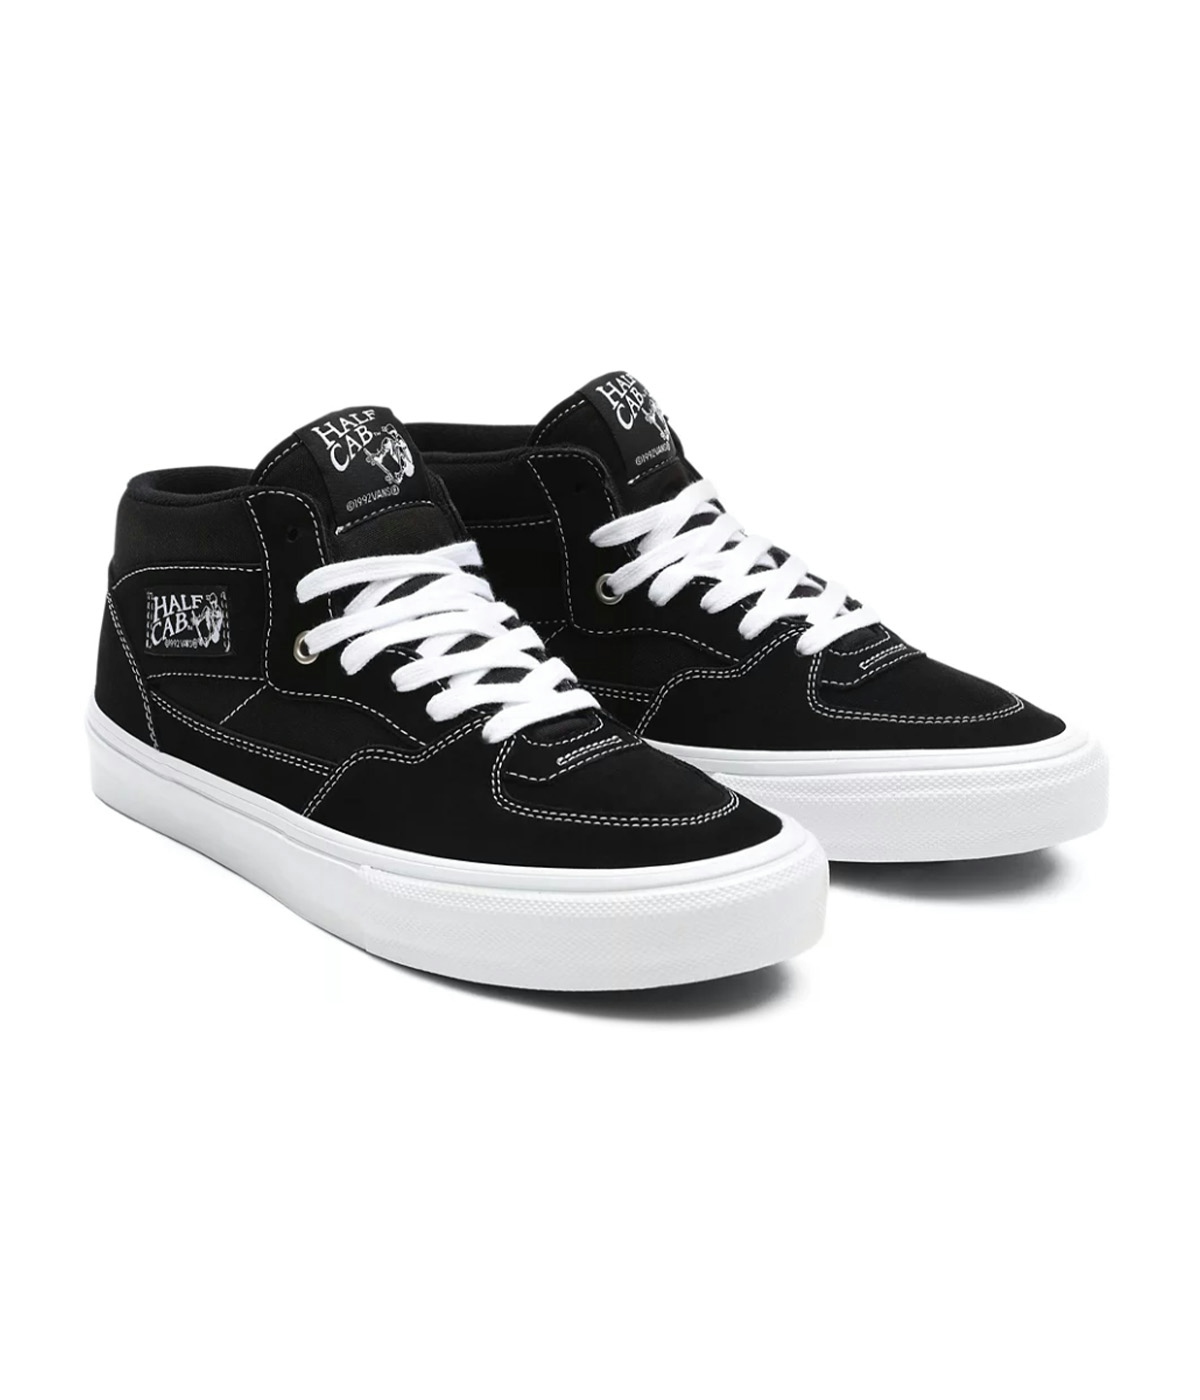 Vans Skate Half Cab Shoes Black/White 1